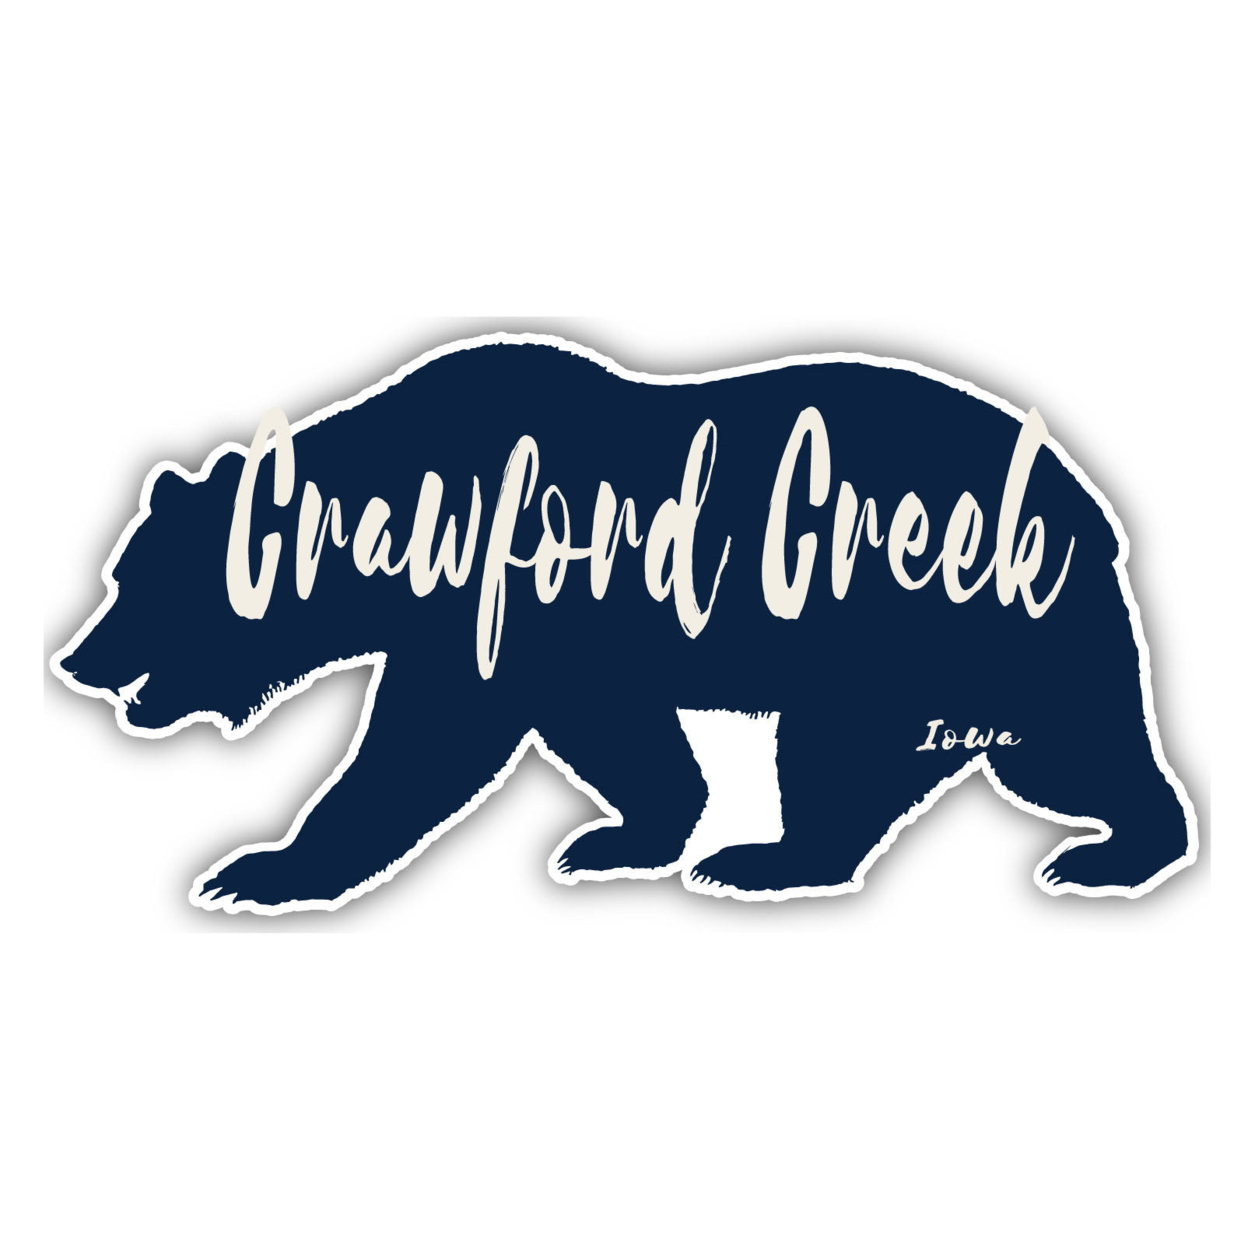 Crawford Creek Iowa Souvenir Decorative Stickers (Choose Theme And Size) - Single Unit, 4-Inch, Bear